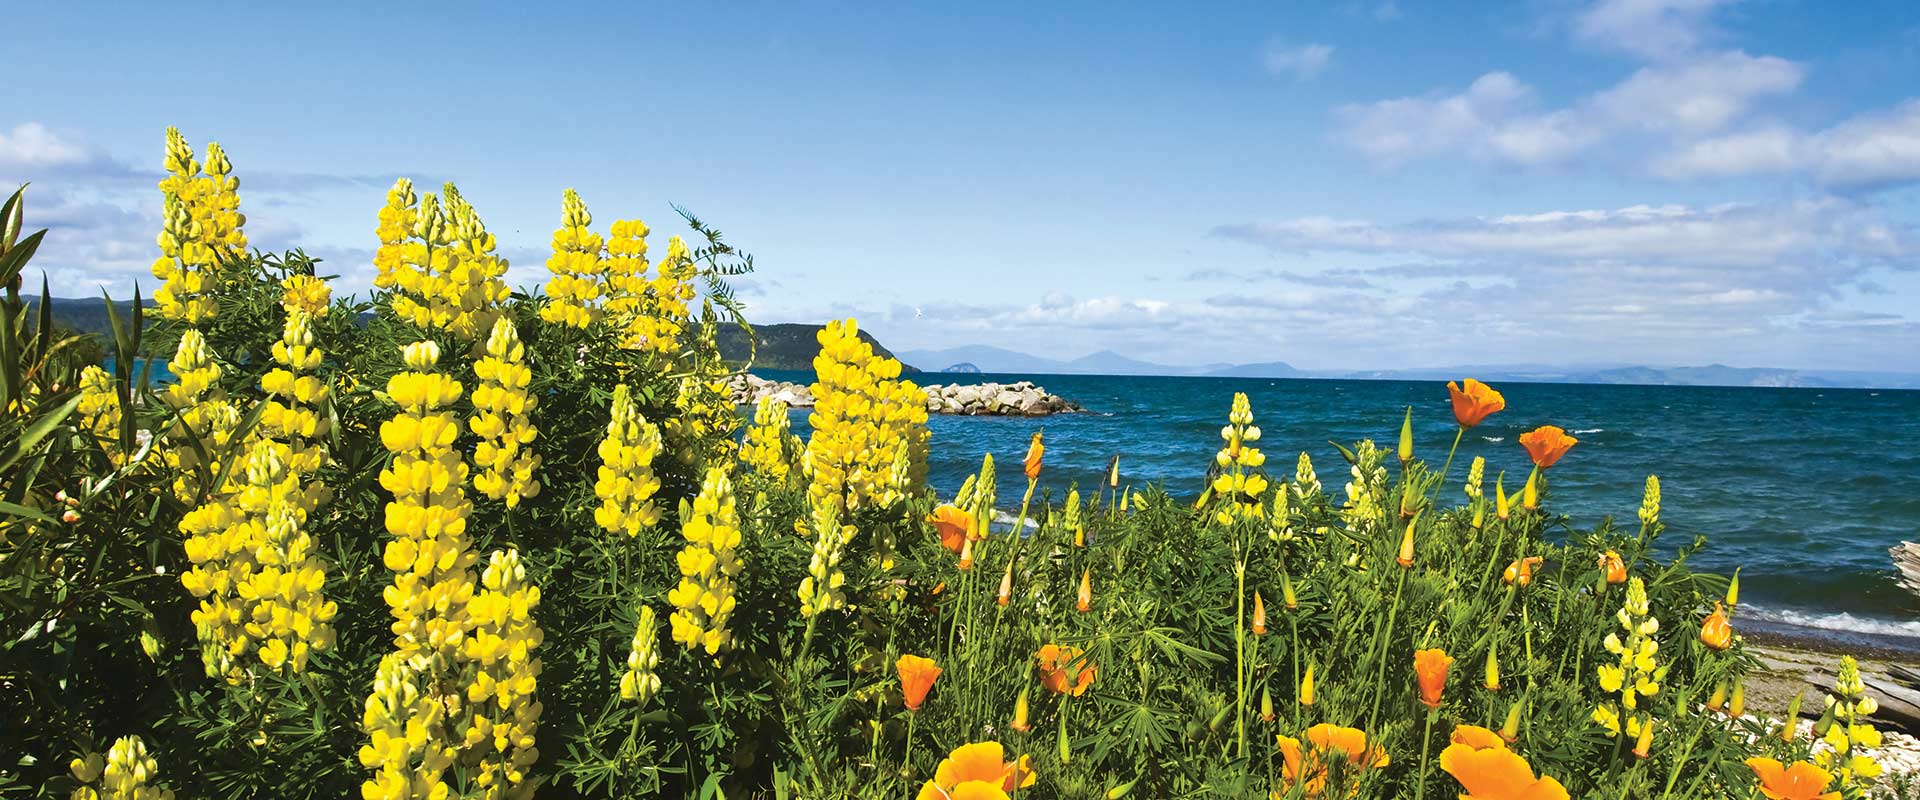 Closeup of yellow lupin flowers growing near the coast of New Zealand